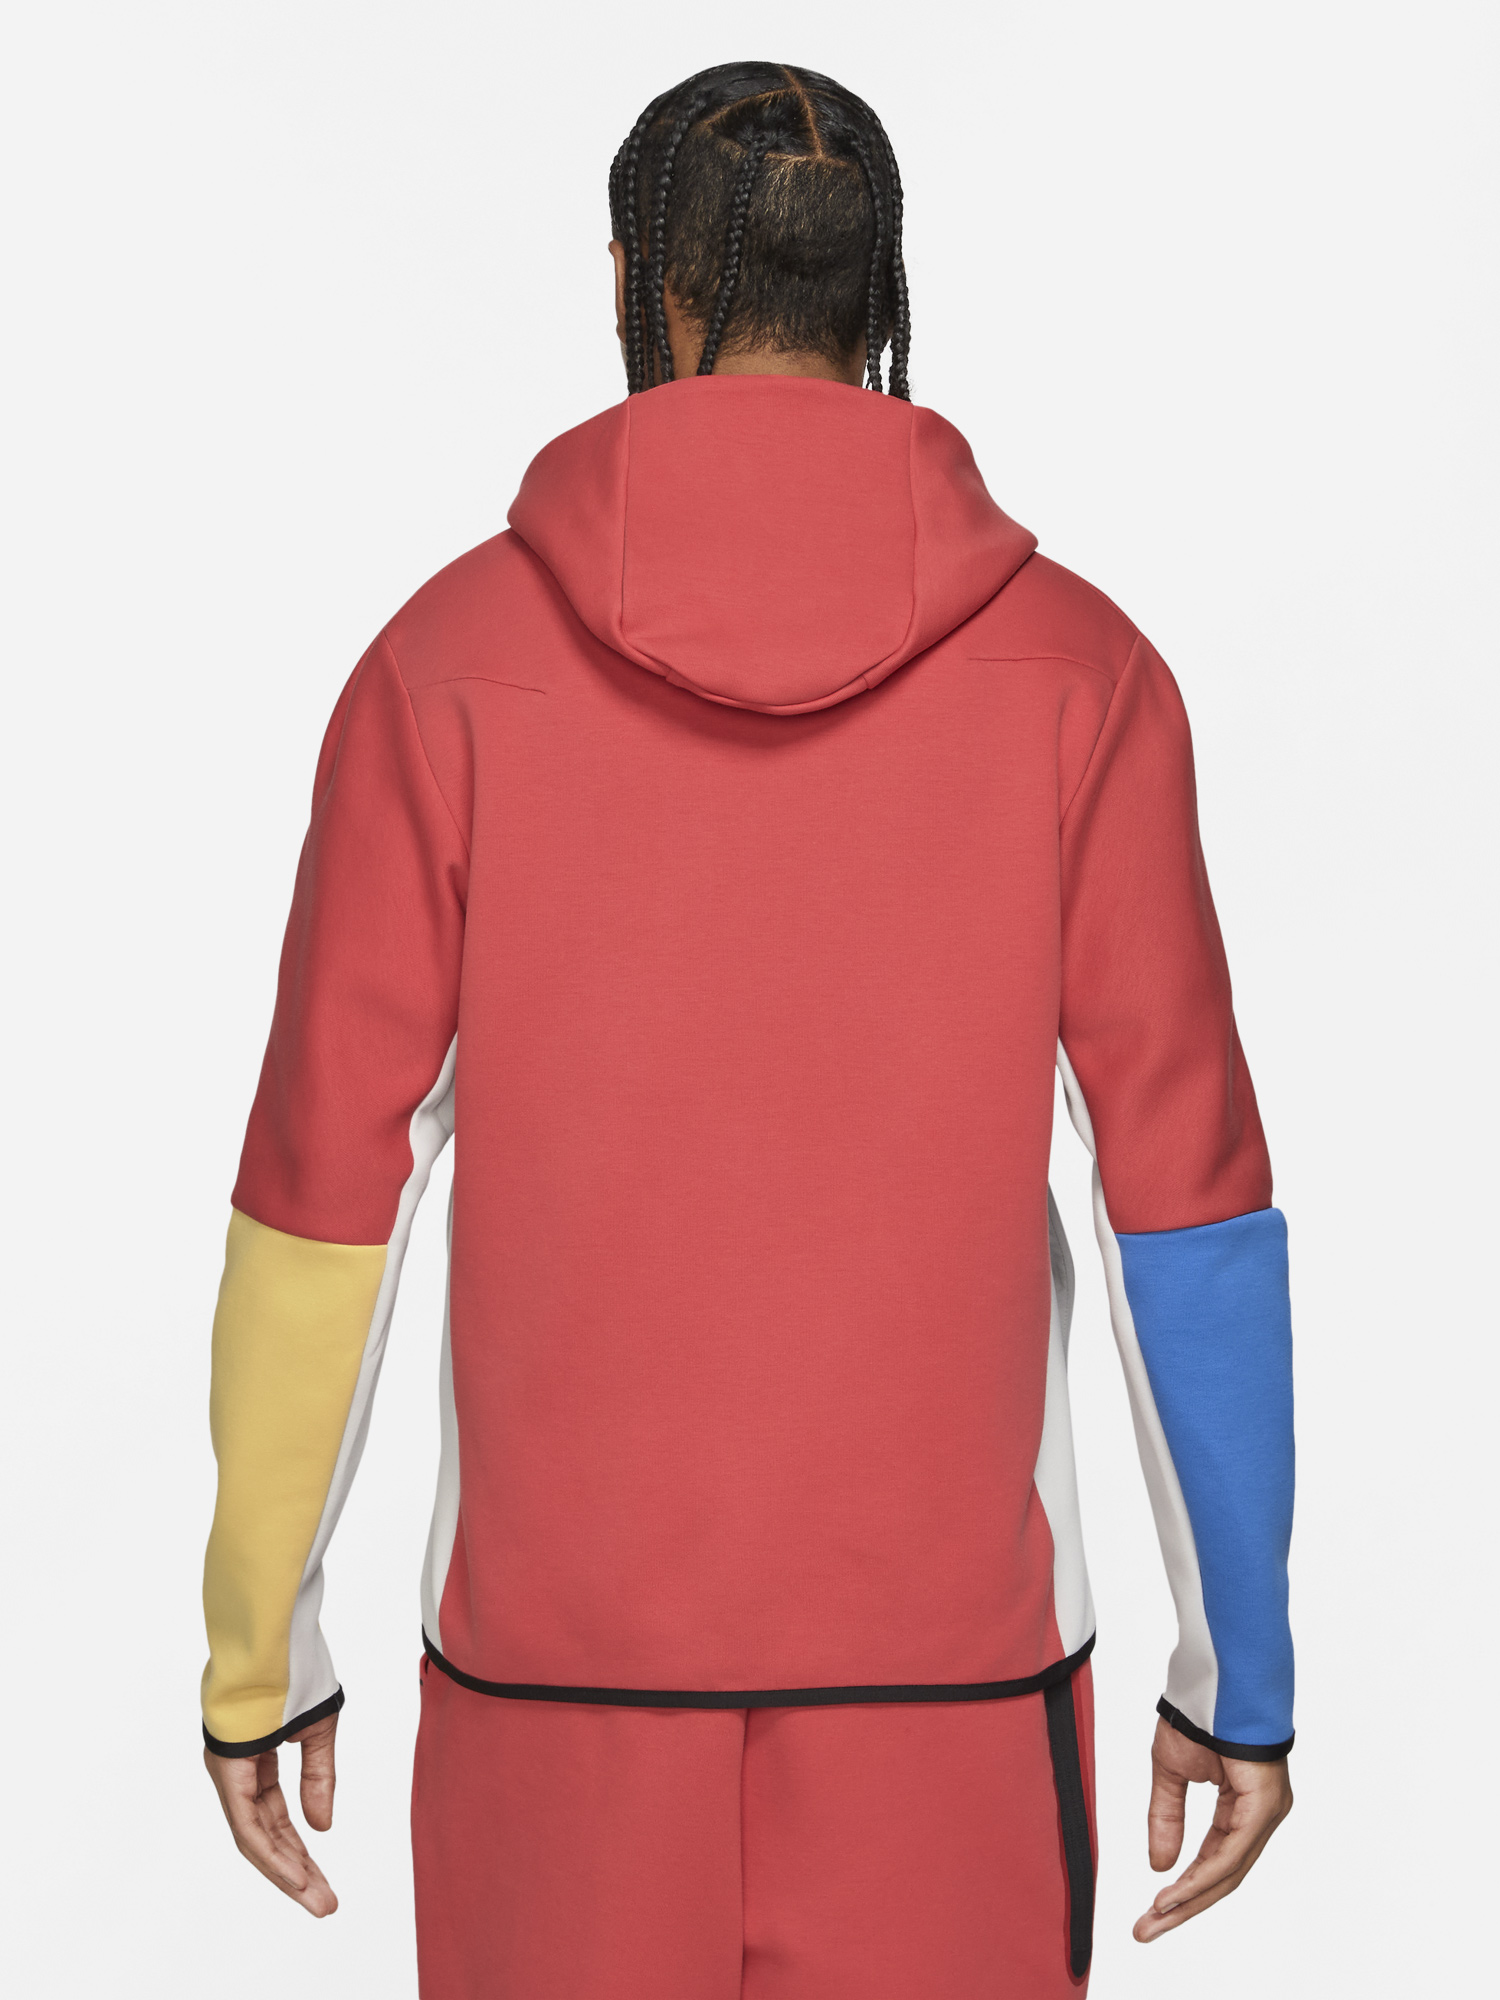 nike-tech-fleece-multicolor-hoodie-red-blue-yellow-2